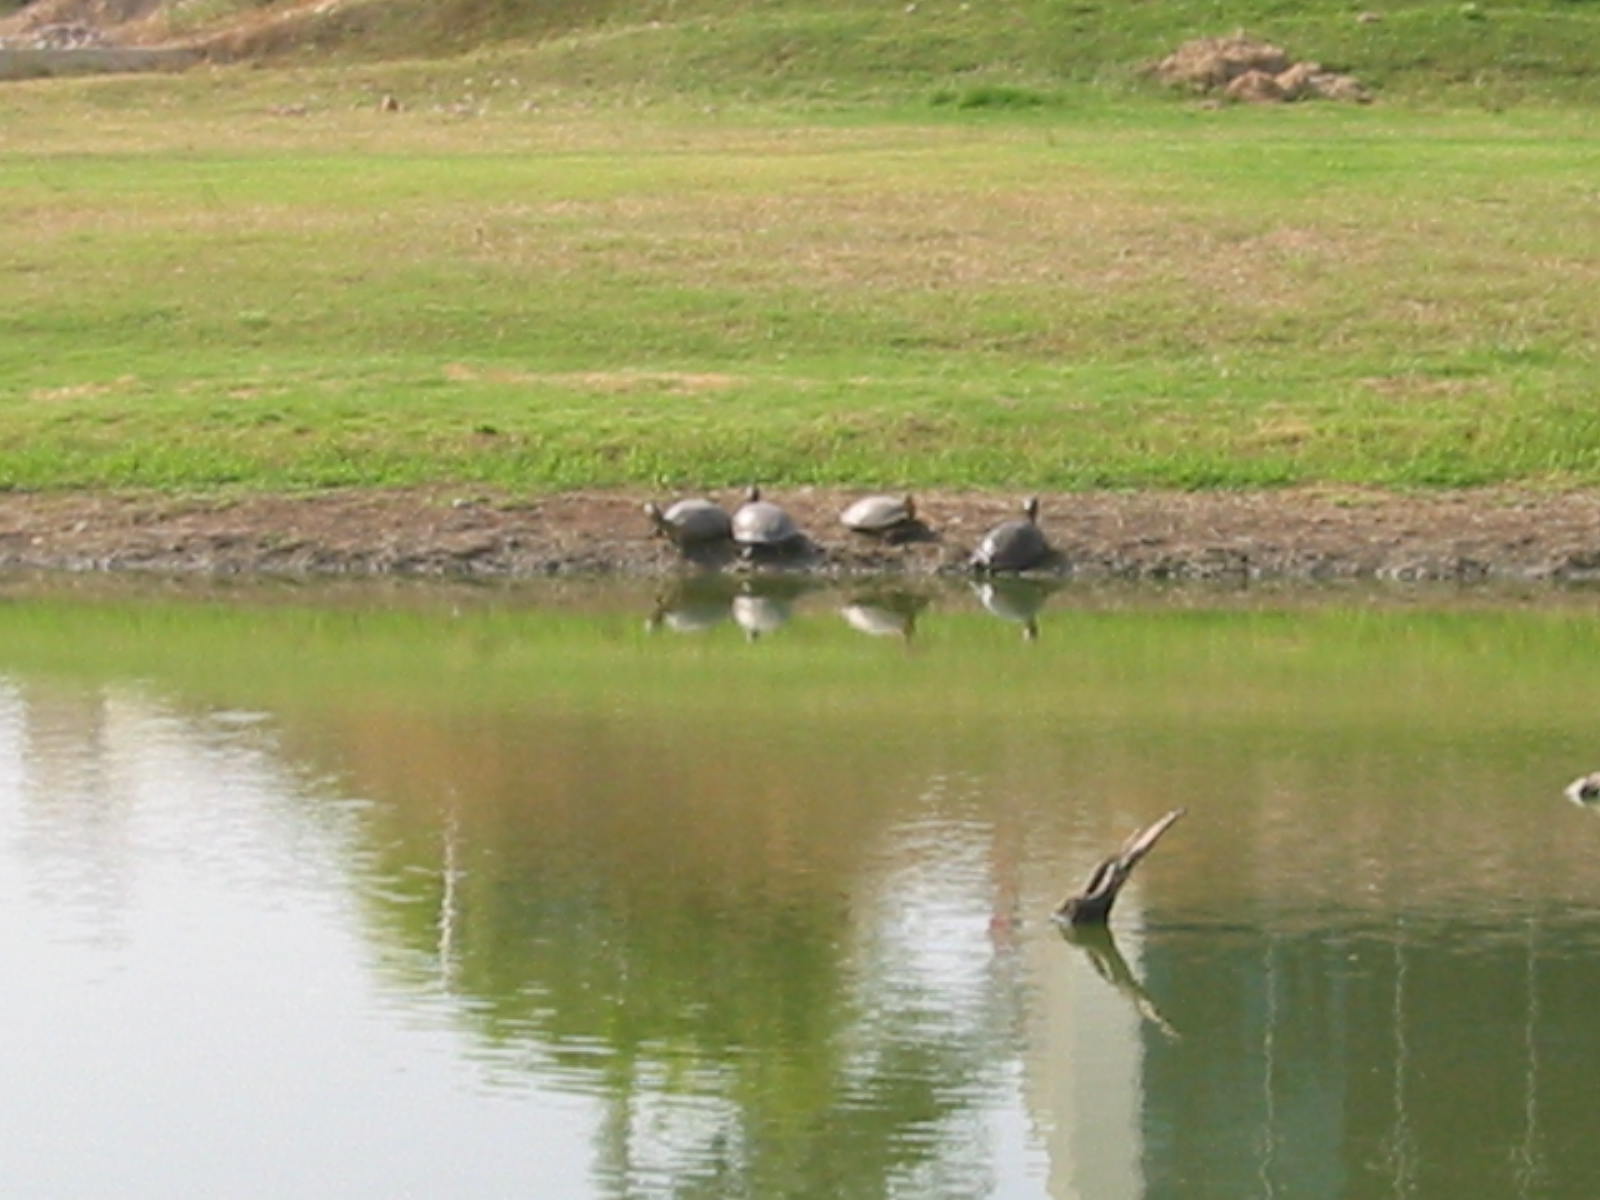 Puerto Vallarta - golf course pond - turtles